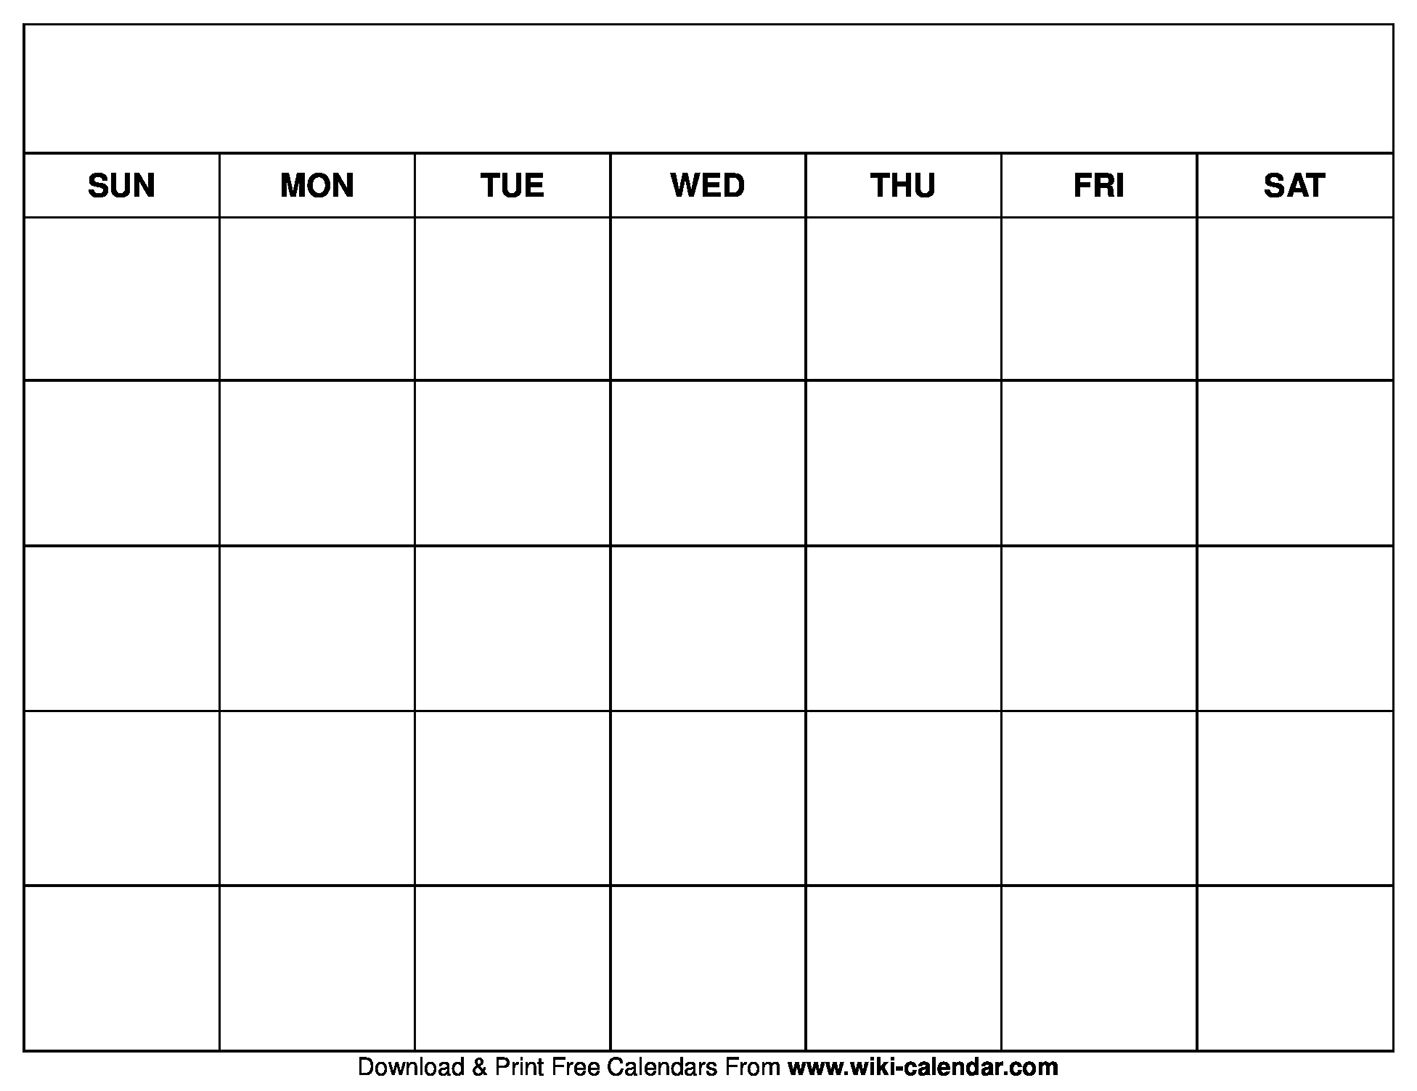 free-printable-weekly-calendar-monday-to-sunday-month-calendar-printable